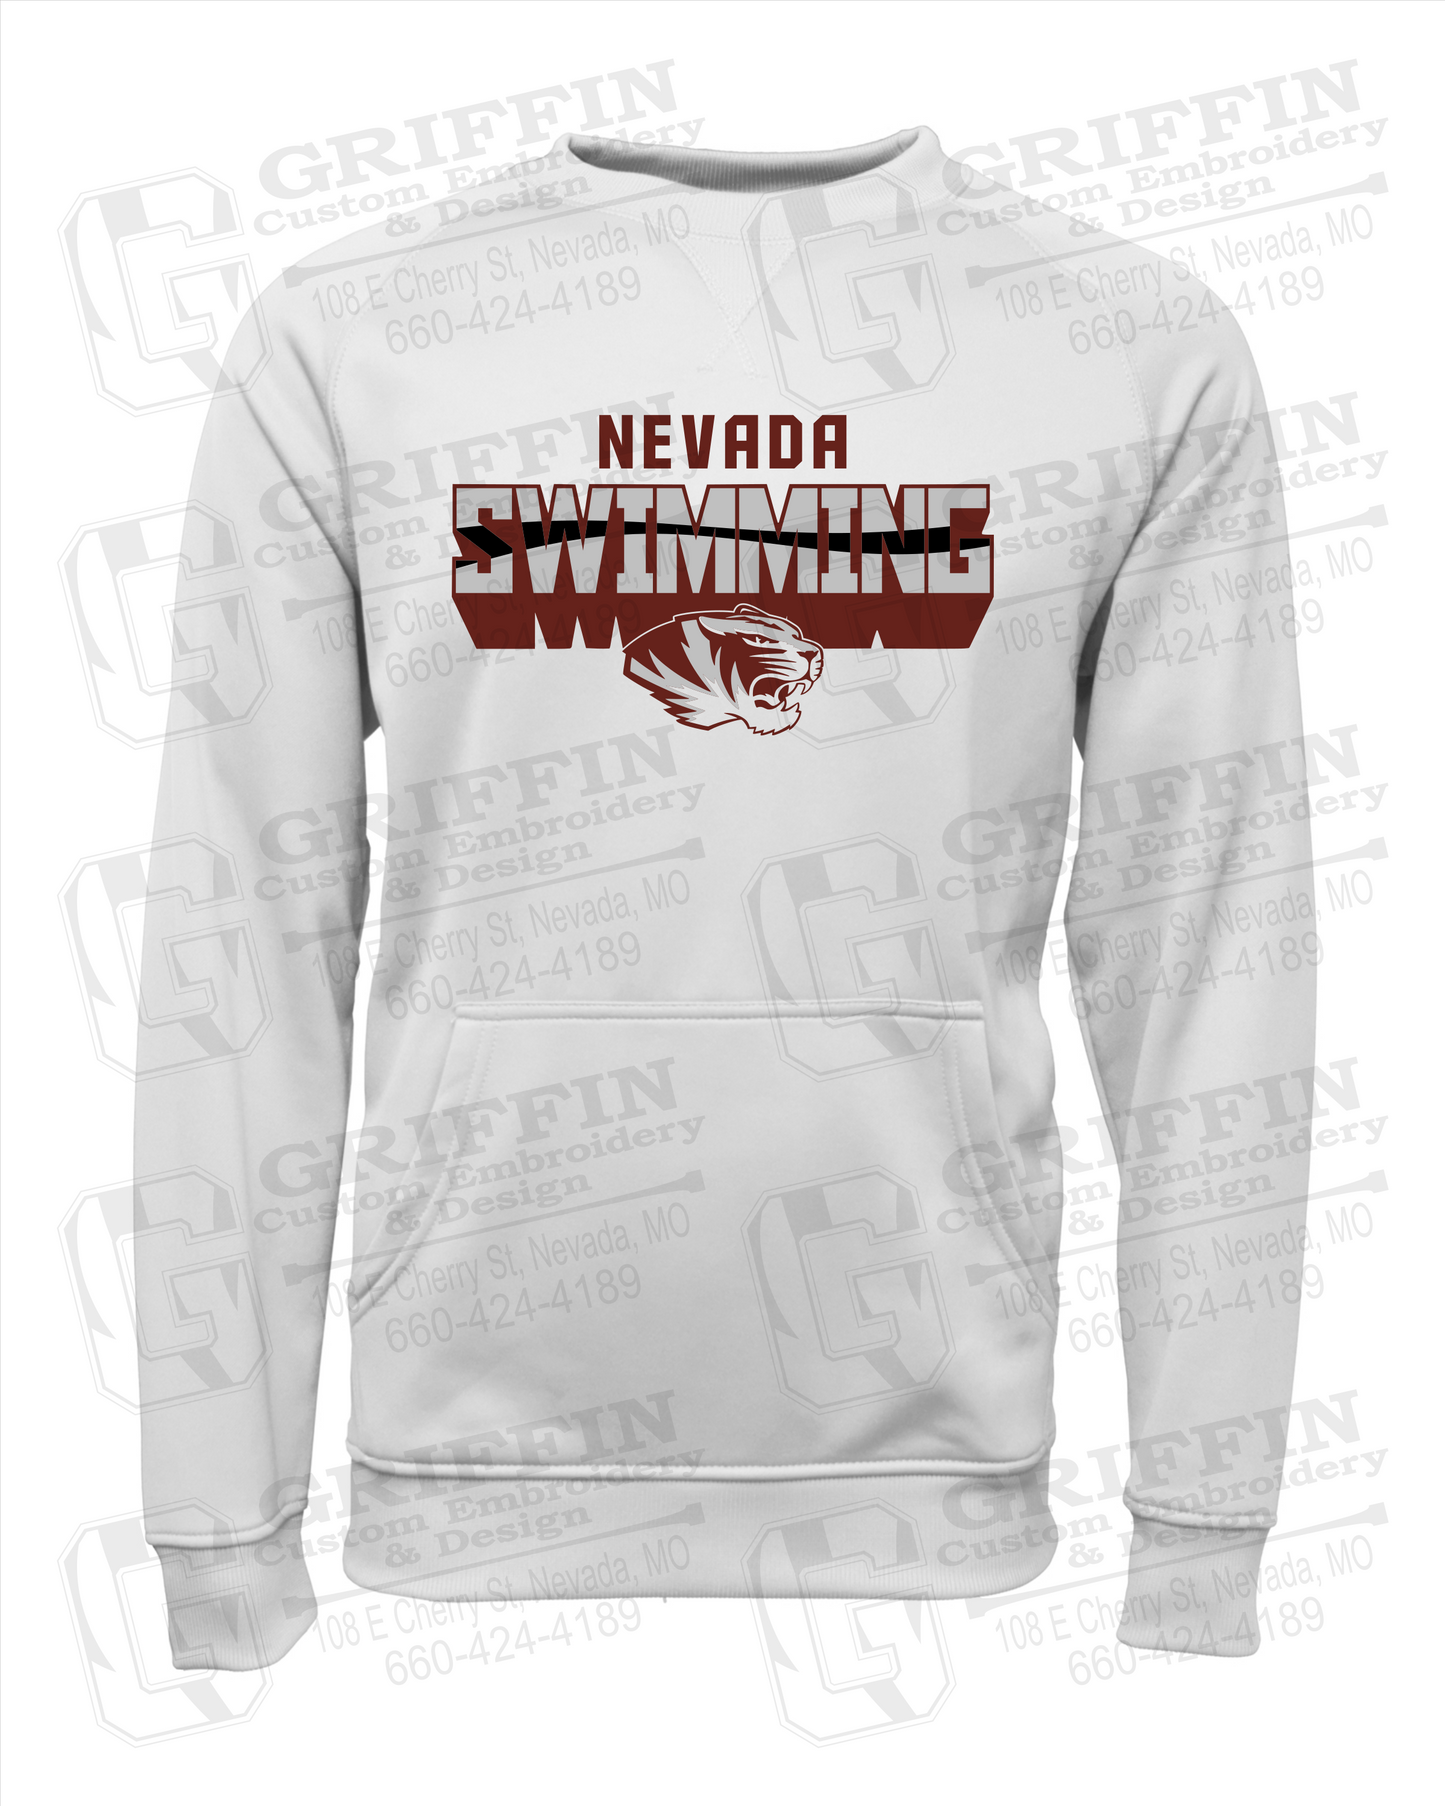 Nevada Tigers 23-V Sweatshirt - Swimming